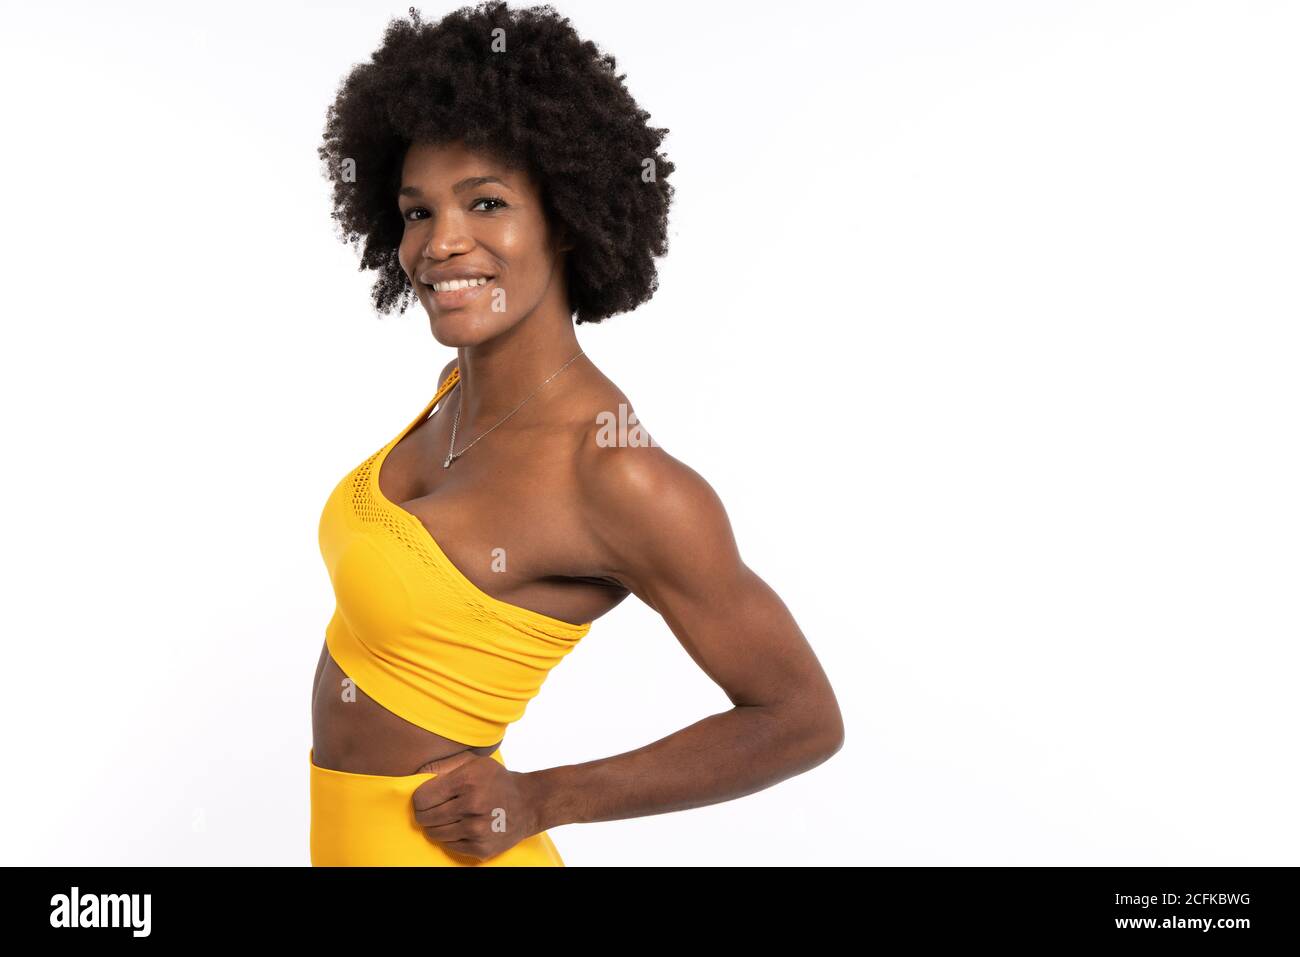 https://c8.alamy.com/comp/2CFKBWG/black-female-in-yellow-sportswear-posing-and-looking-away-against-gray-background-2CFKBWG.jpg